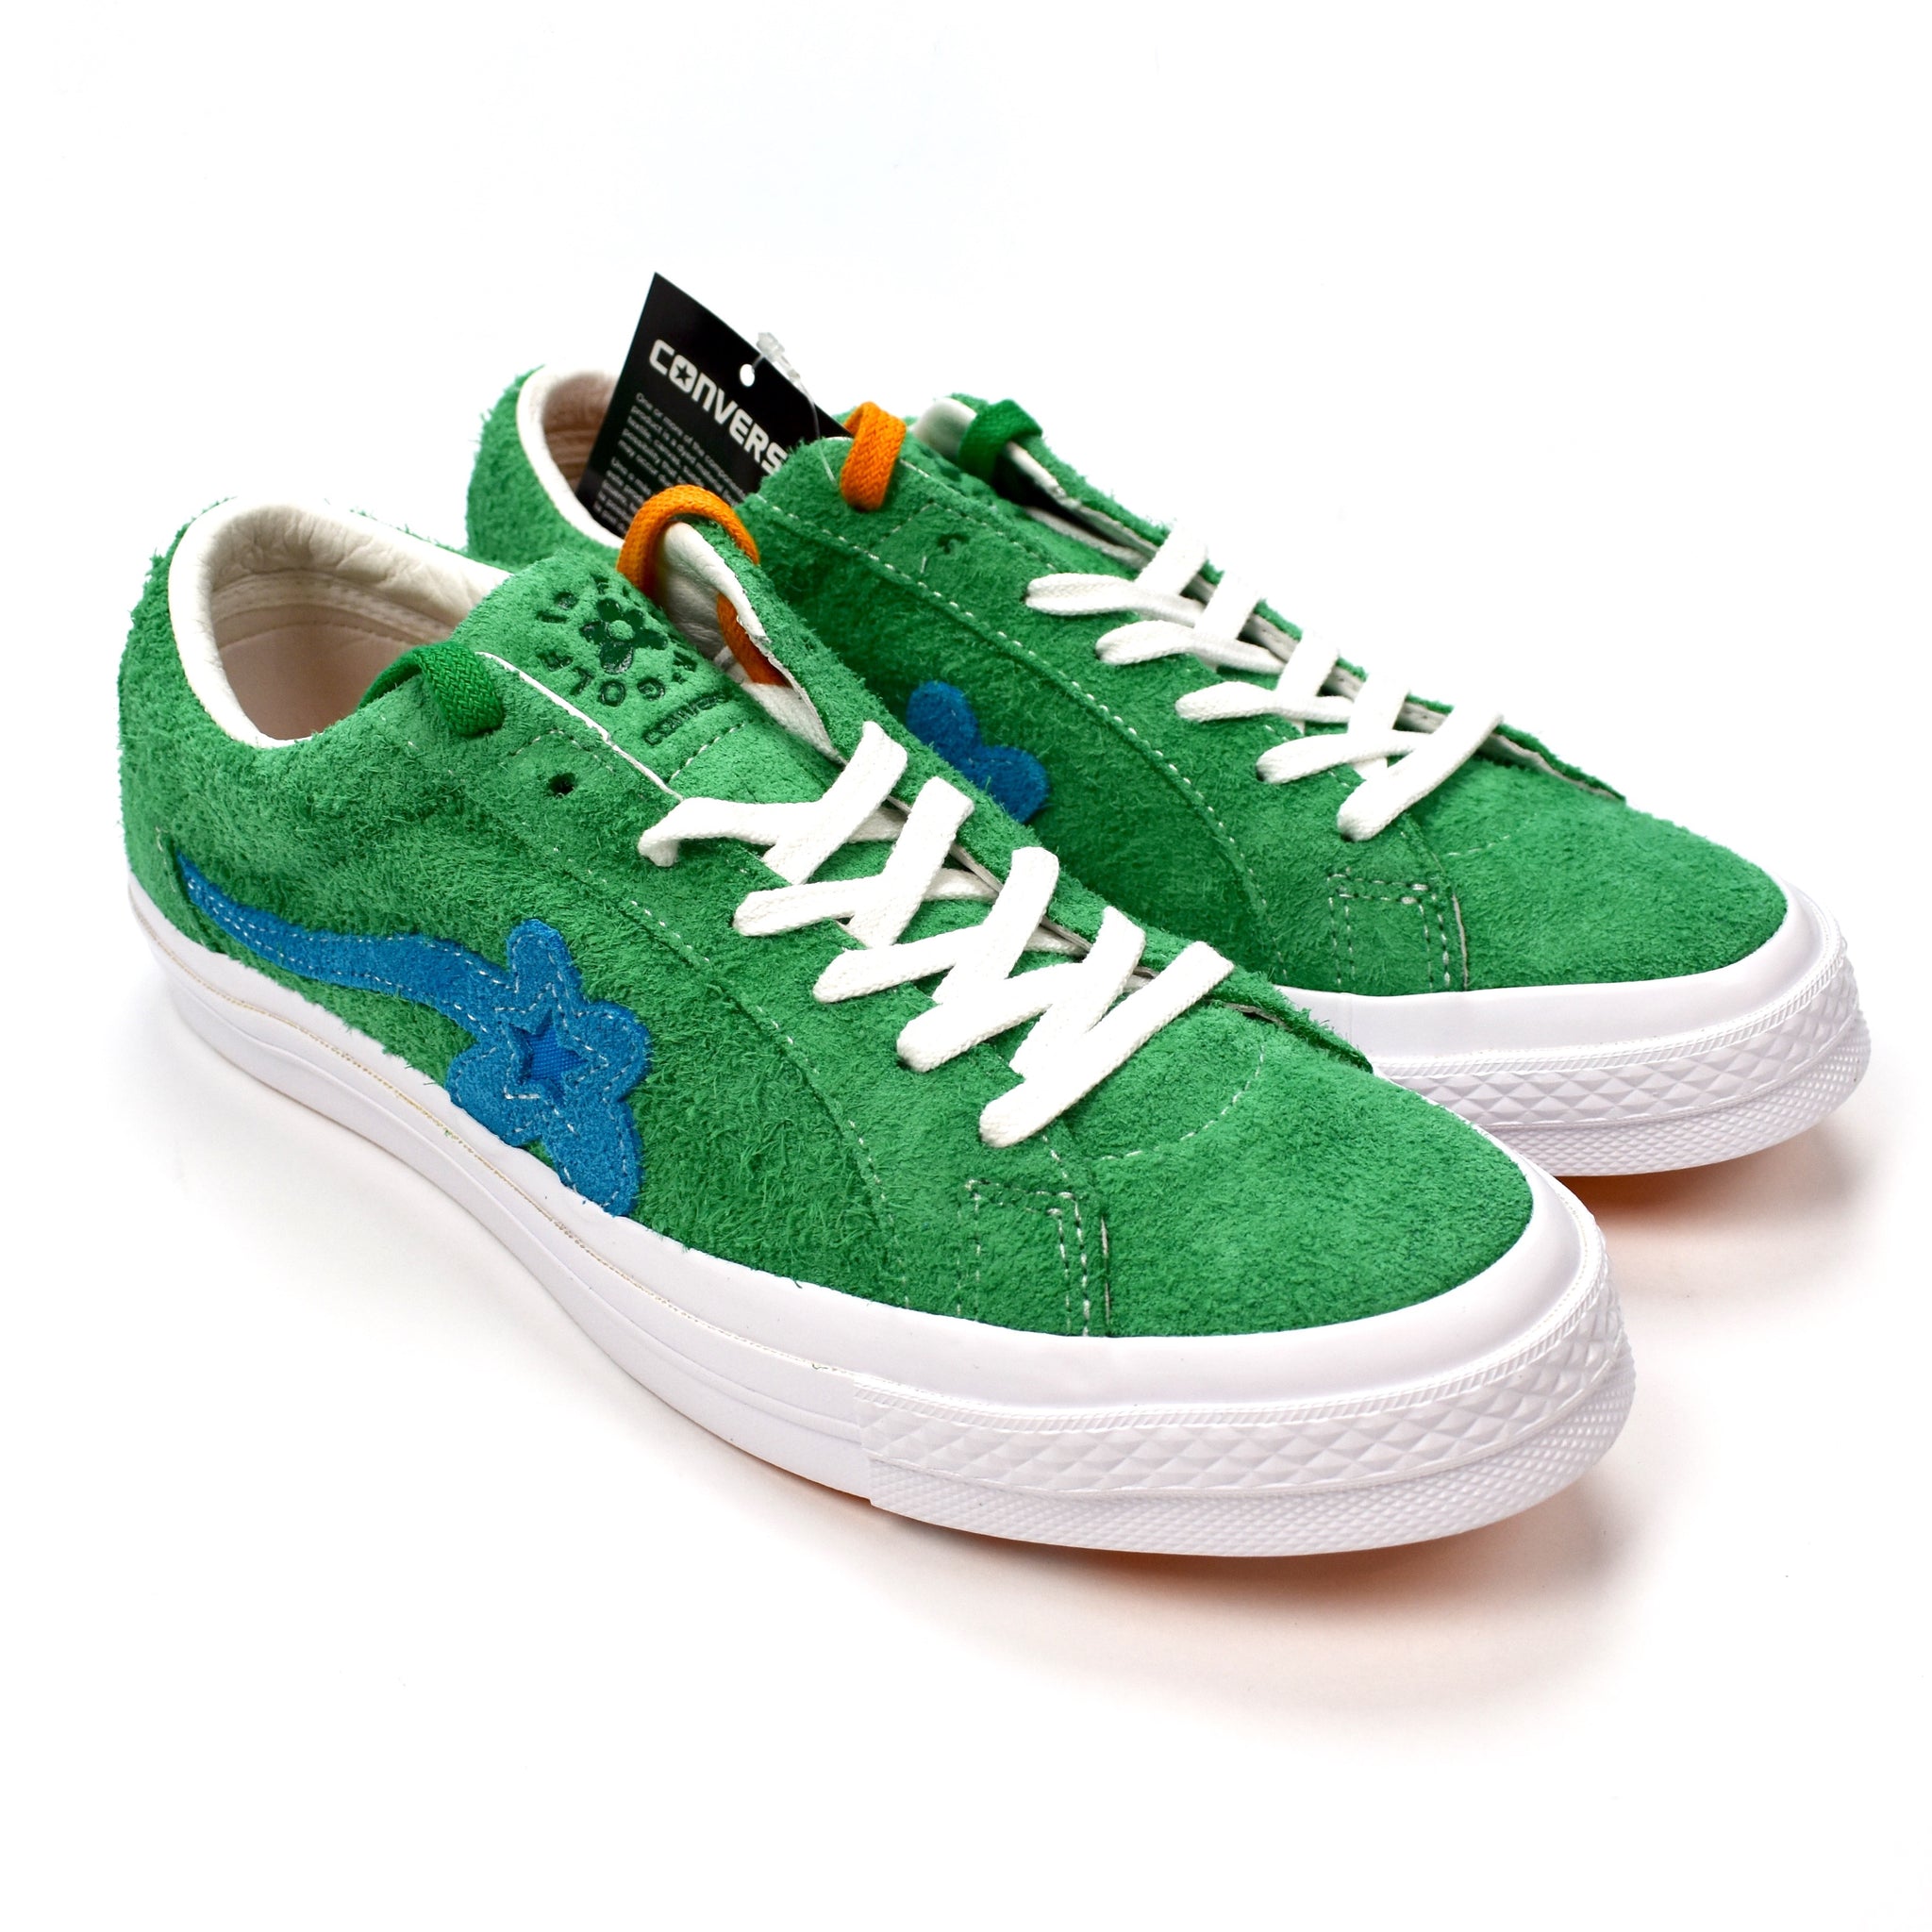 Converse x Golf Wang - Jolly Green 'Golf Le Fleur' One Star Sneakers – eluXive2048 x 2048